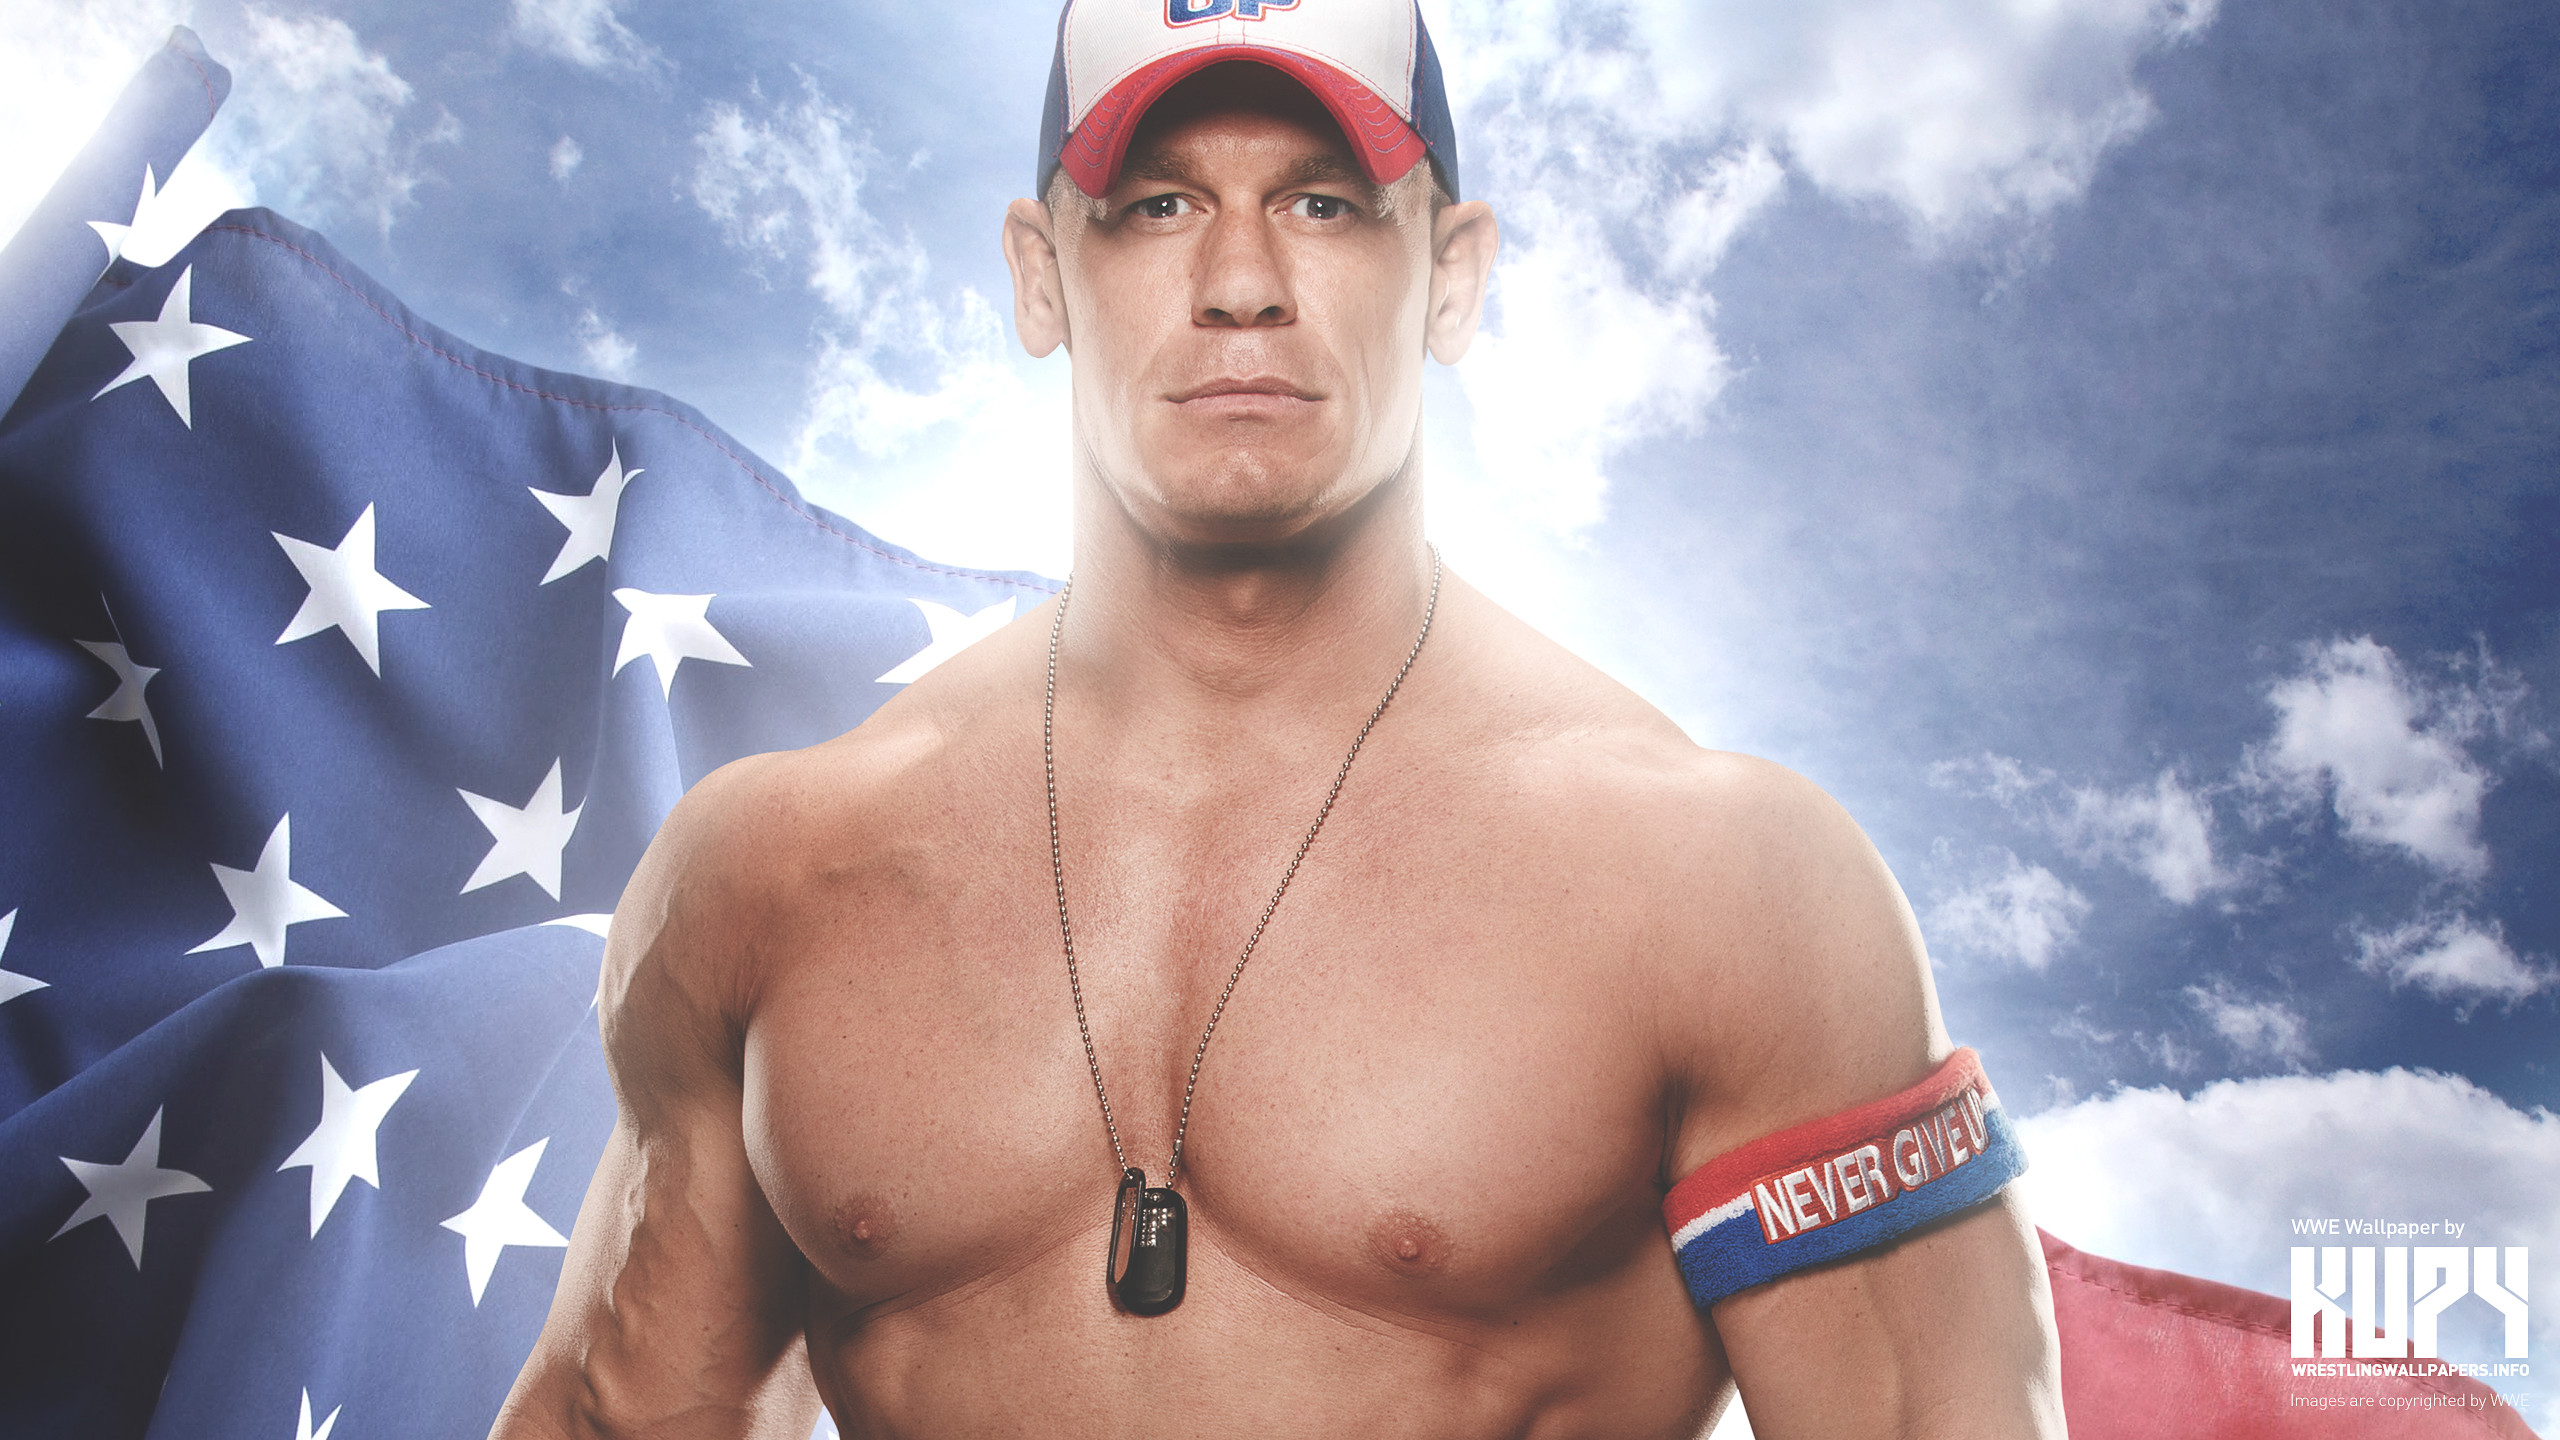 John Cena Wallpaper In 4k HD Wwe Image Pics